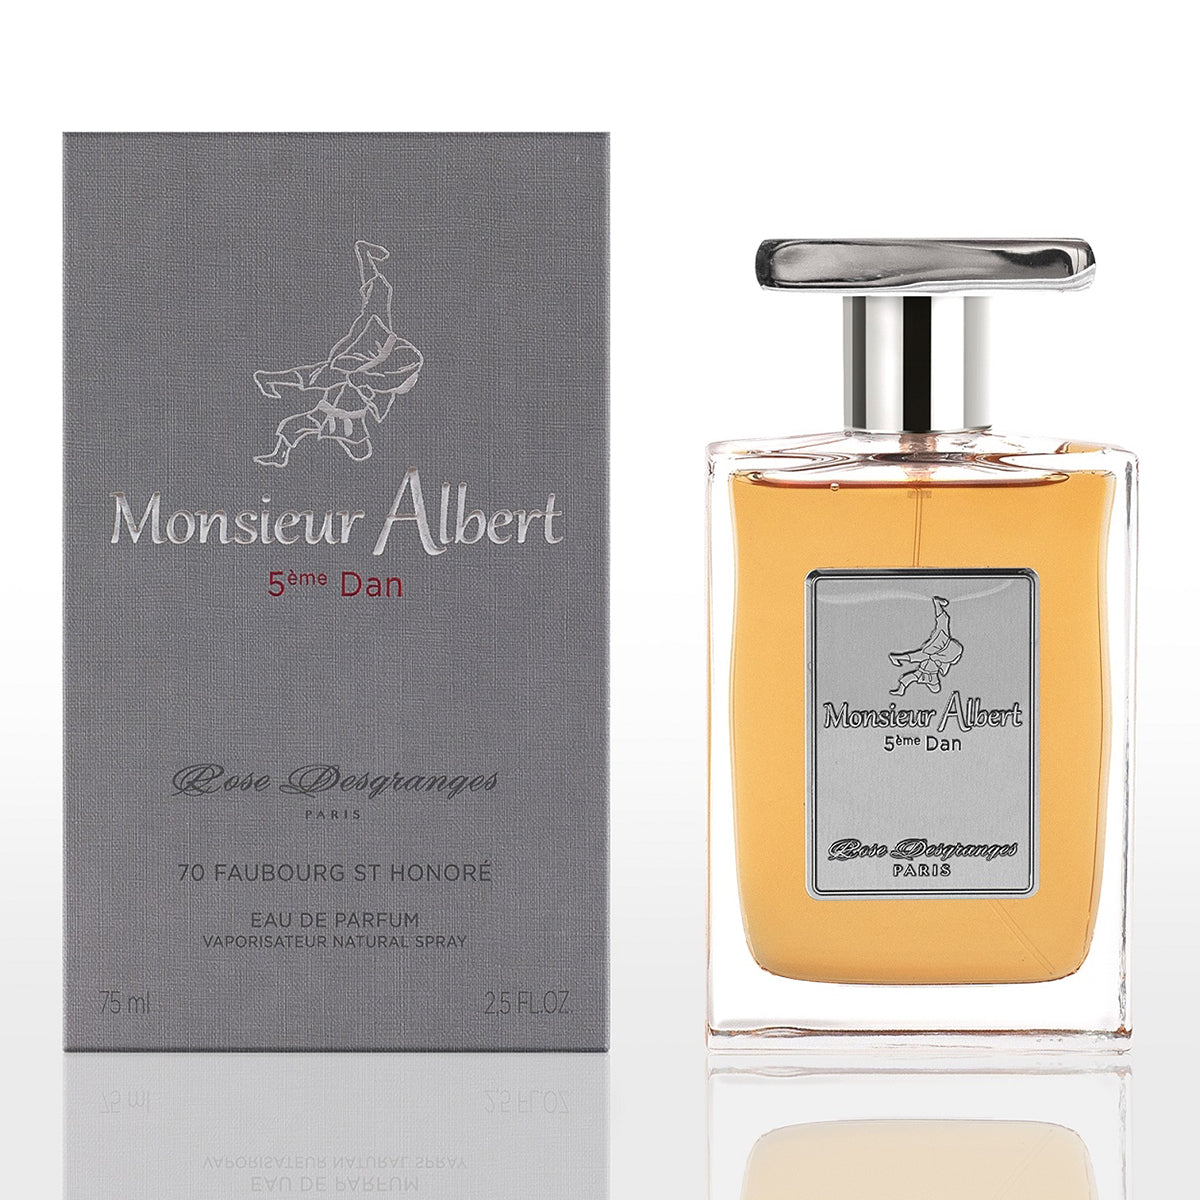 Monsieur Albert 5ème Dan Eau de Parfum 75ml